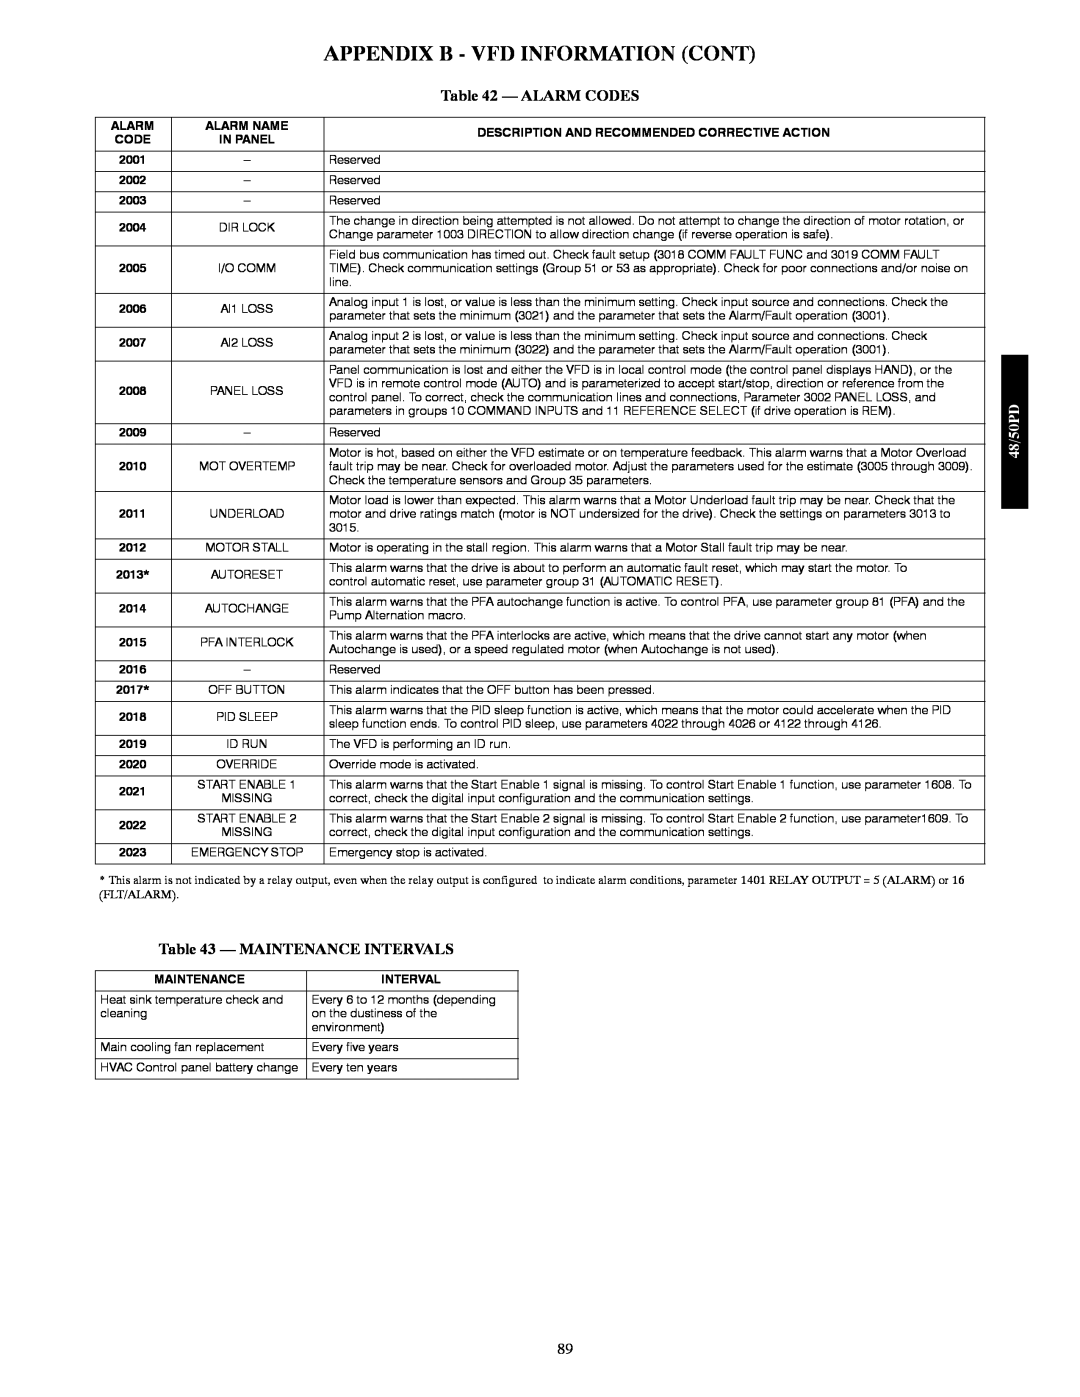 Carrier 48/50PD05 manual Appendix B - Vfd Information Cont, Alarm Codes, Maintenance Intervals 